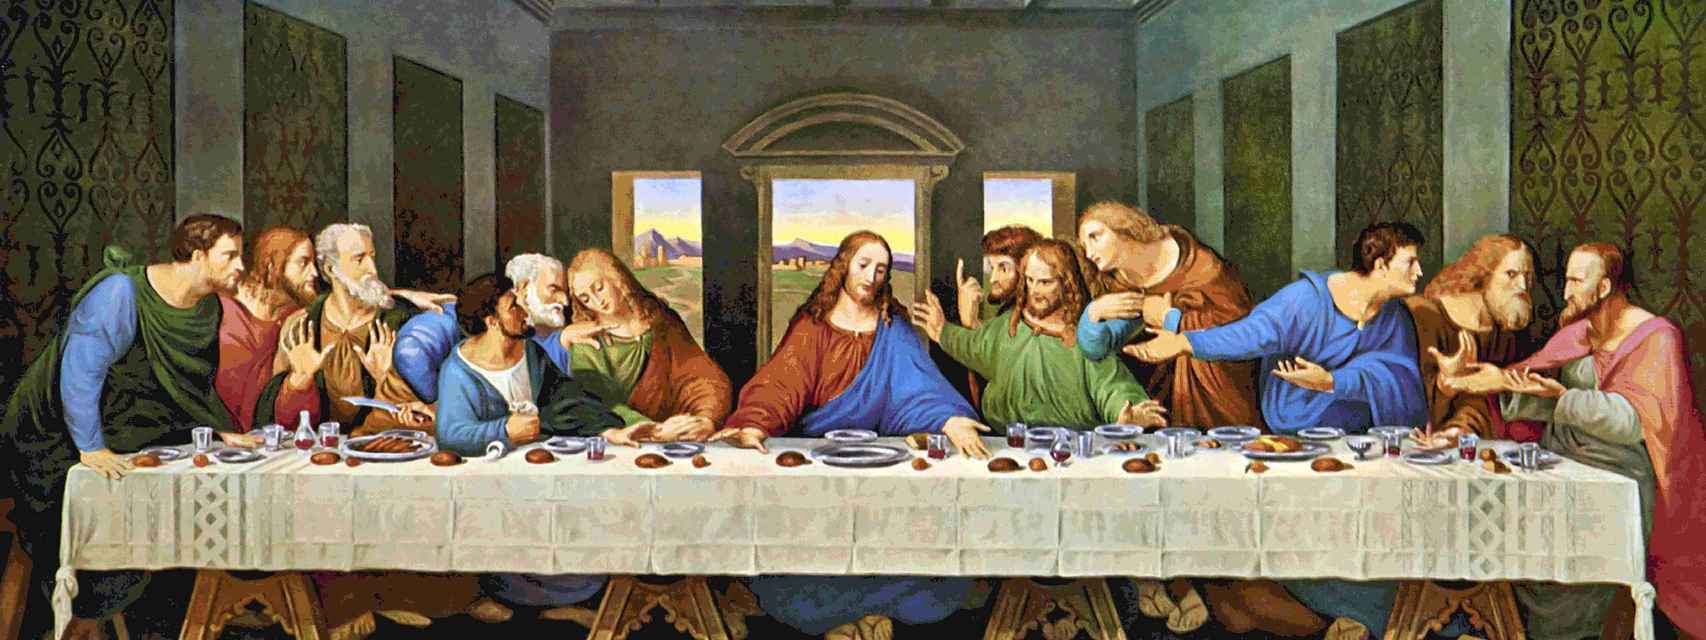 La última cena de Da Vinci.